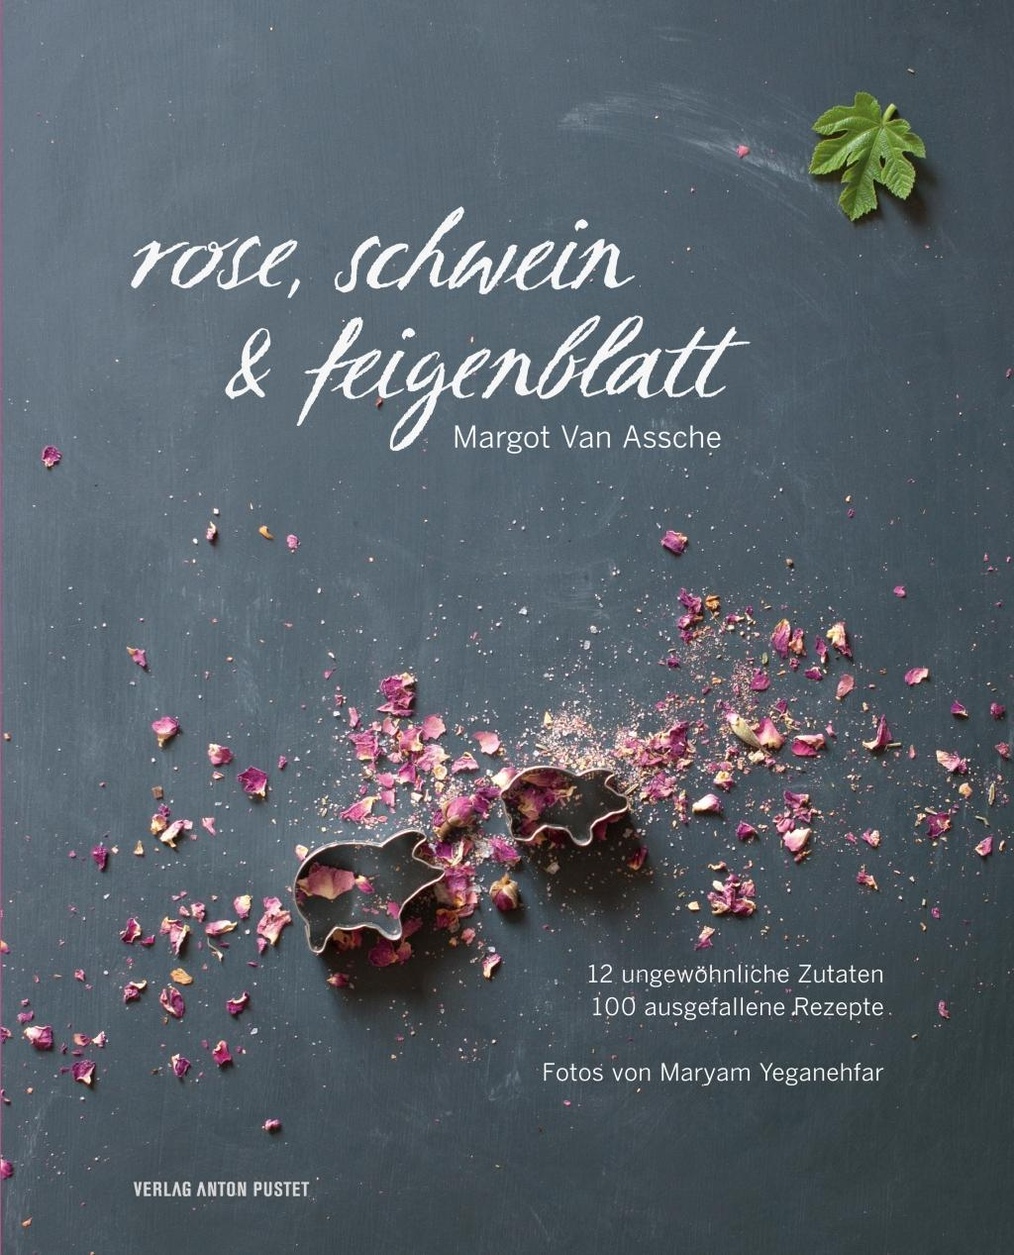 Margot Van Assche, Rose, Schwein & Feigenblatt